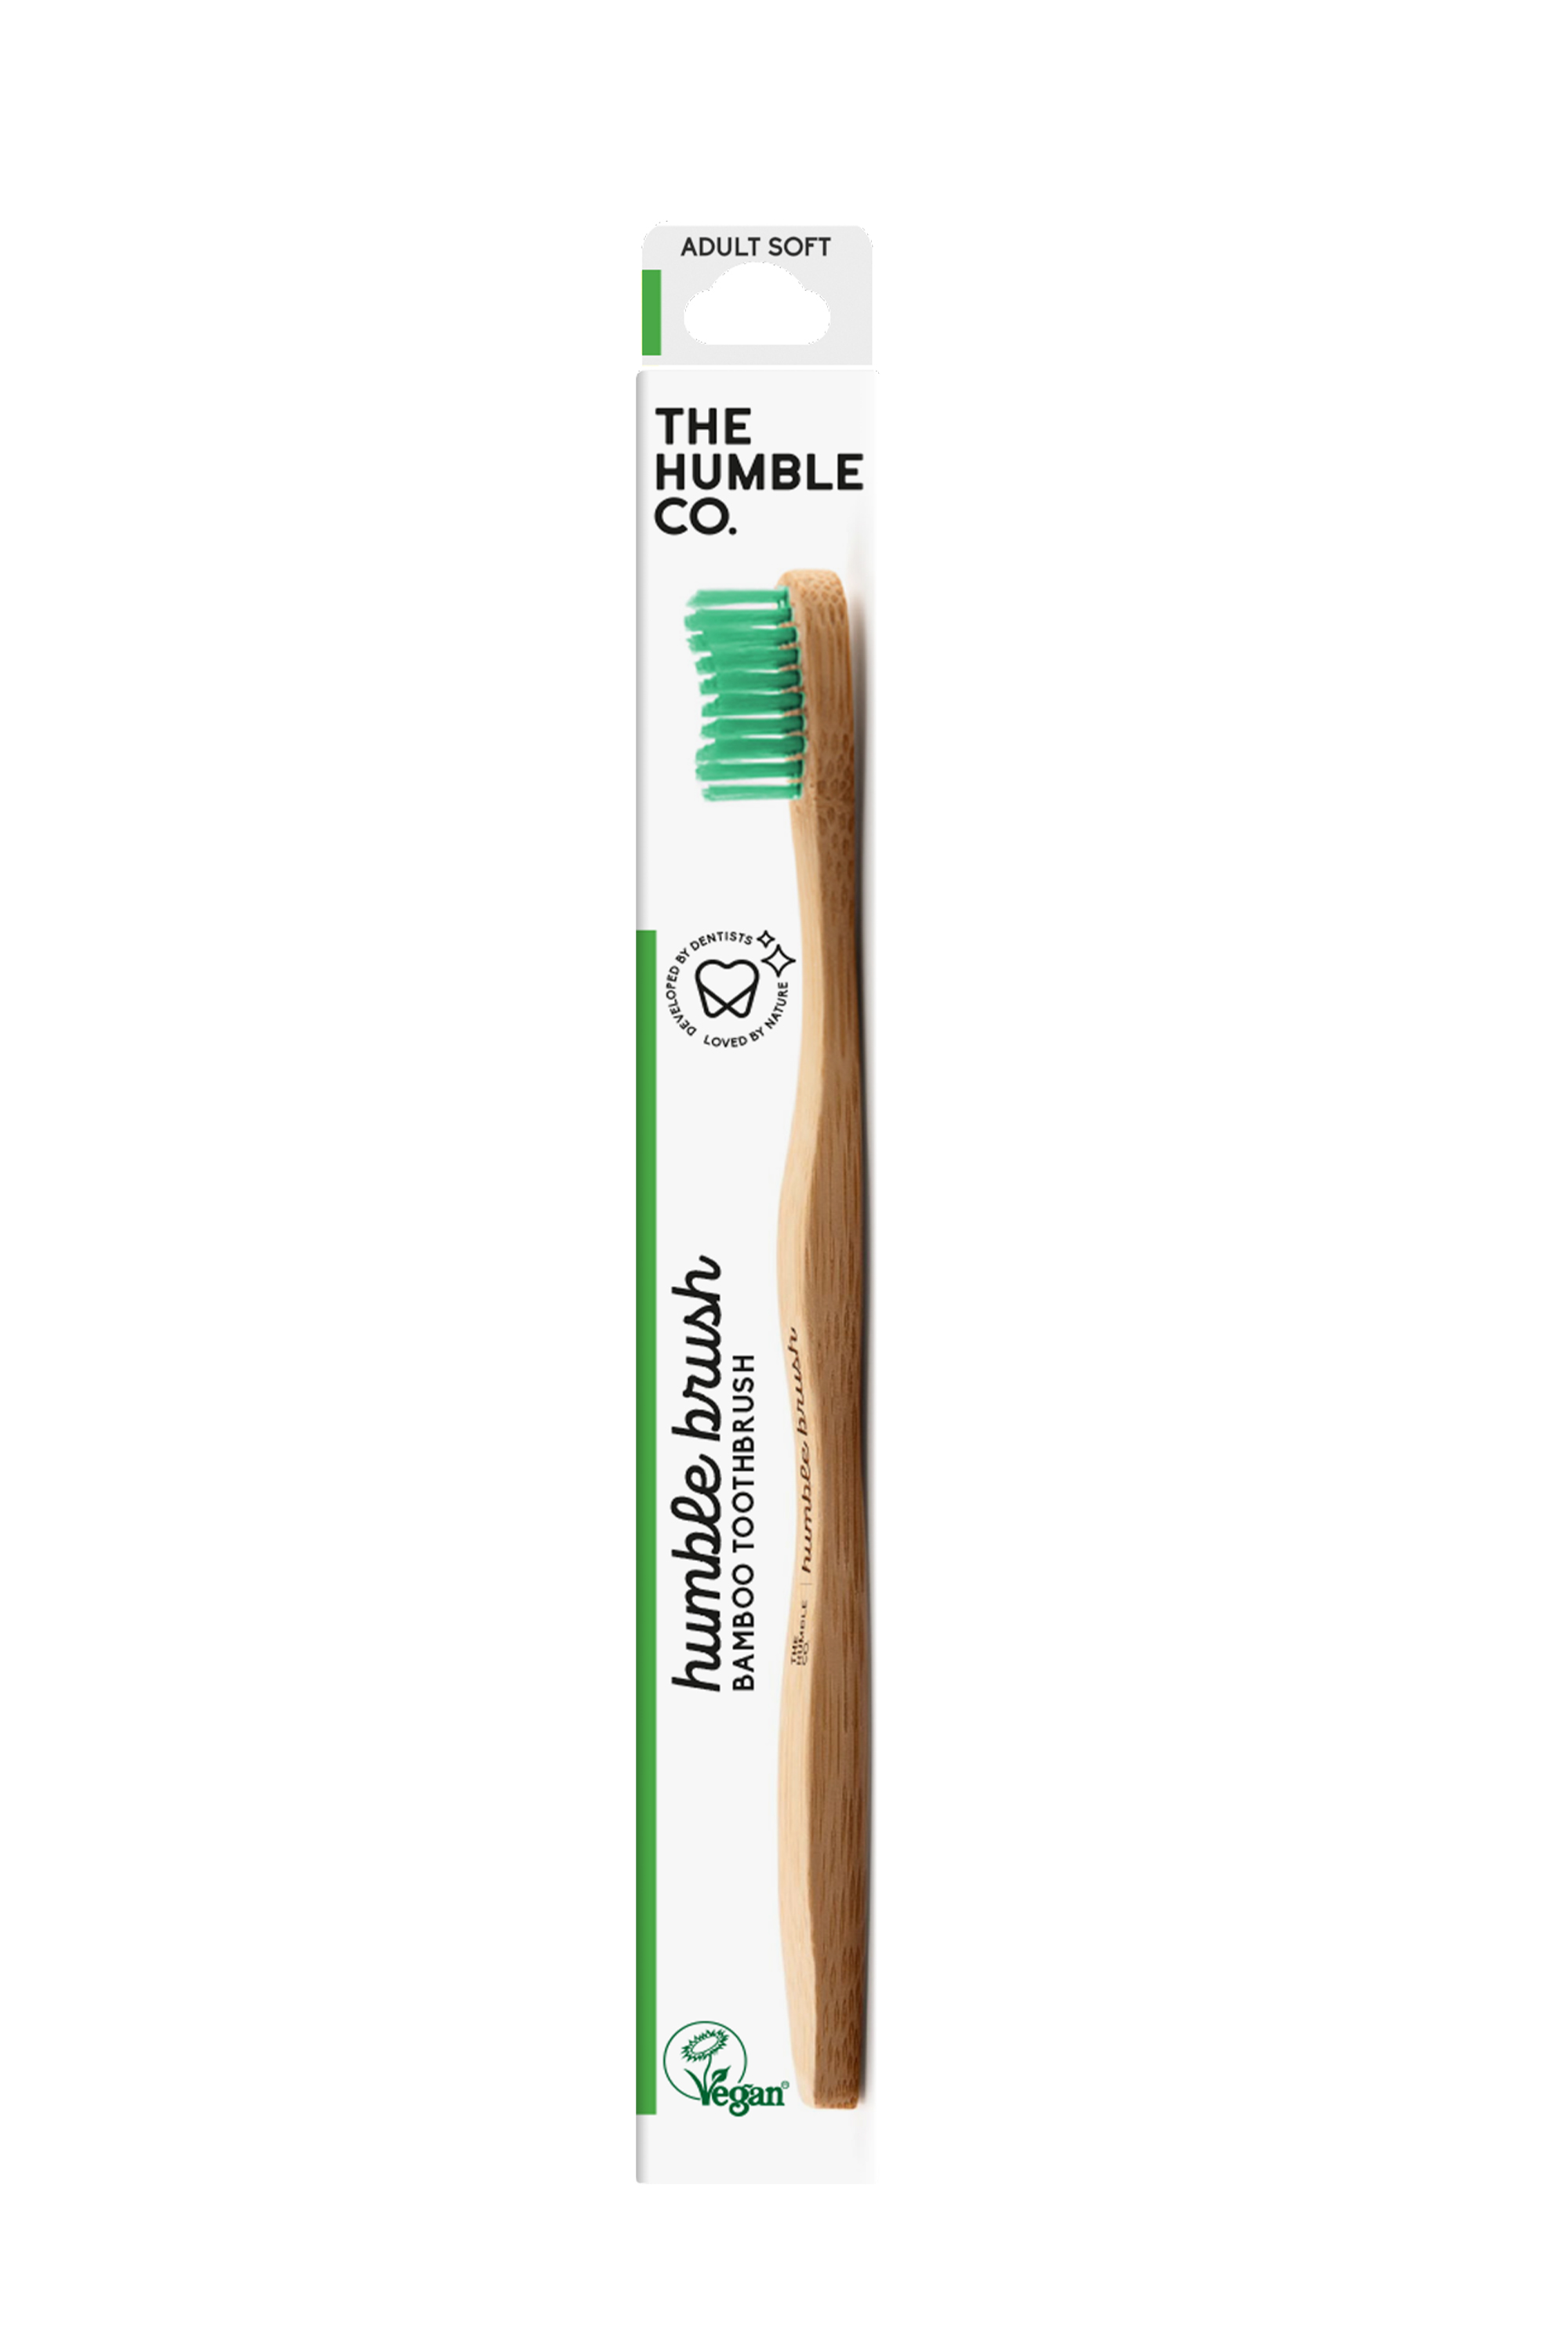 The Humble Co. Humble Brush Adult Green, Soft, 1 stk